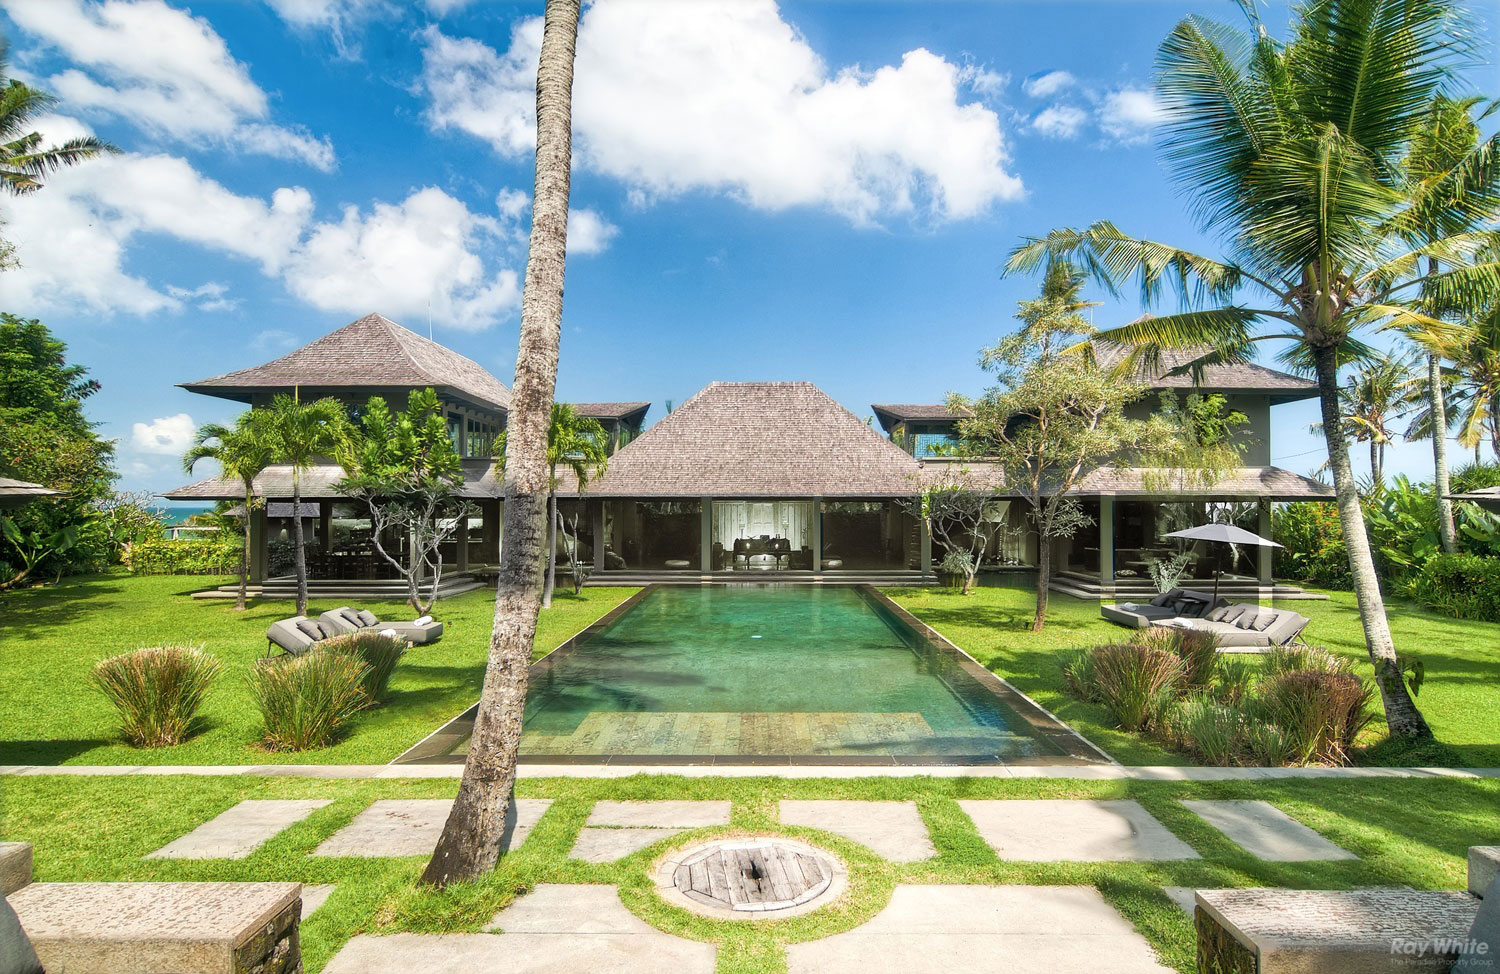 Ландшафтный дизайн территории виллы на Бали